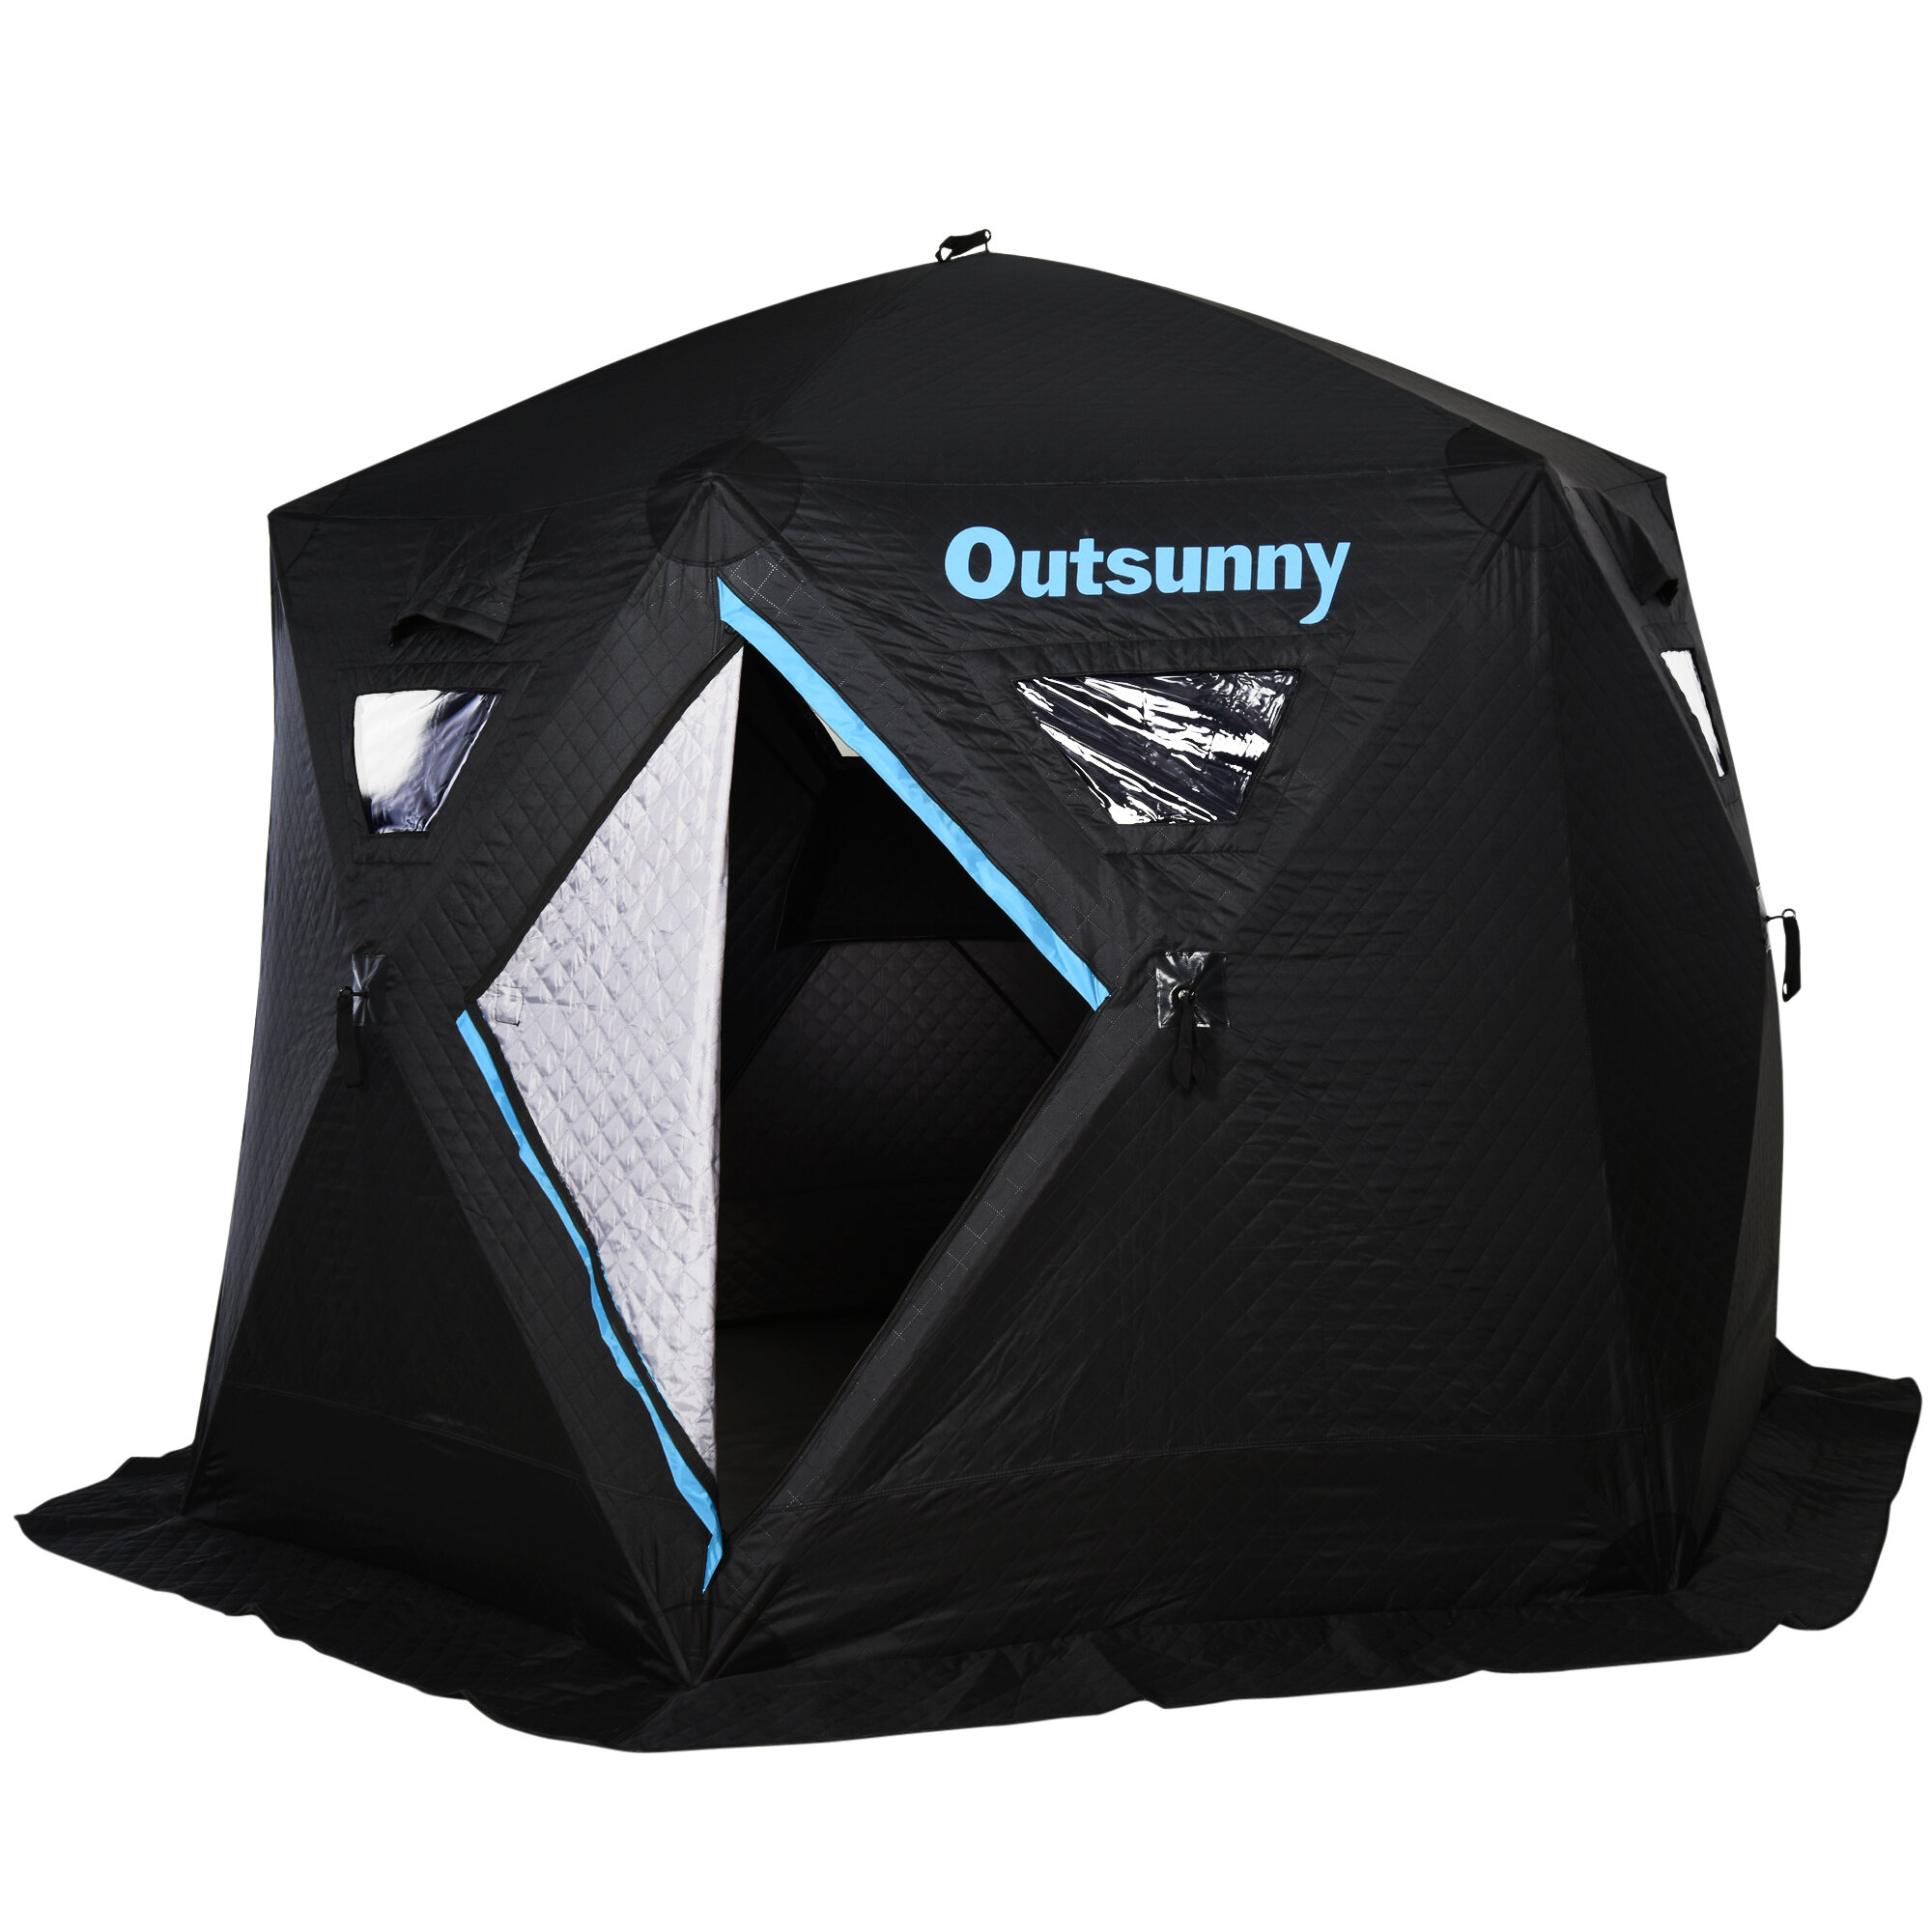 Outsunny 6 Person Tent